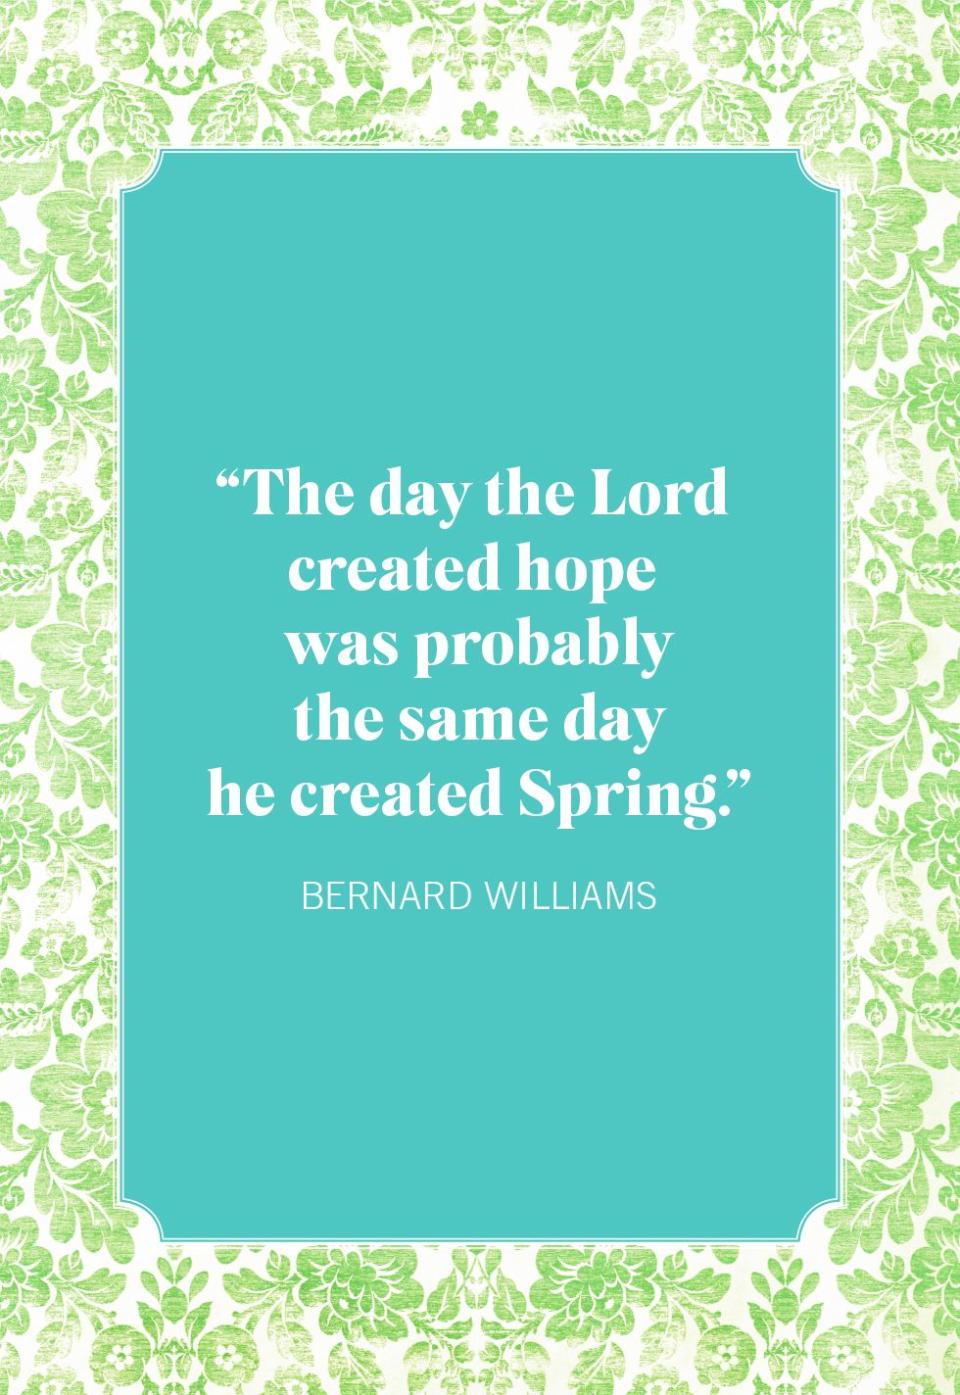 spring quotes williams bernard williams